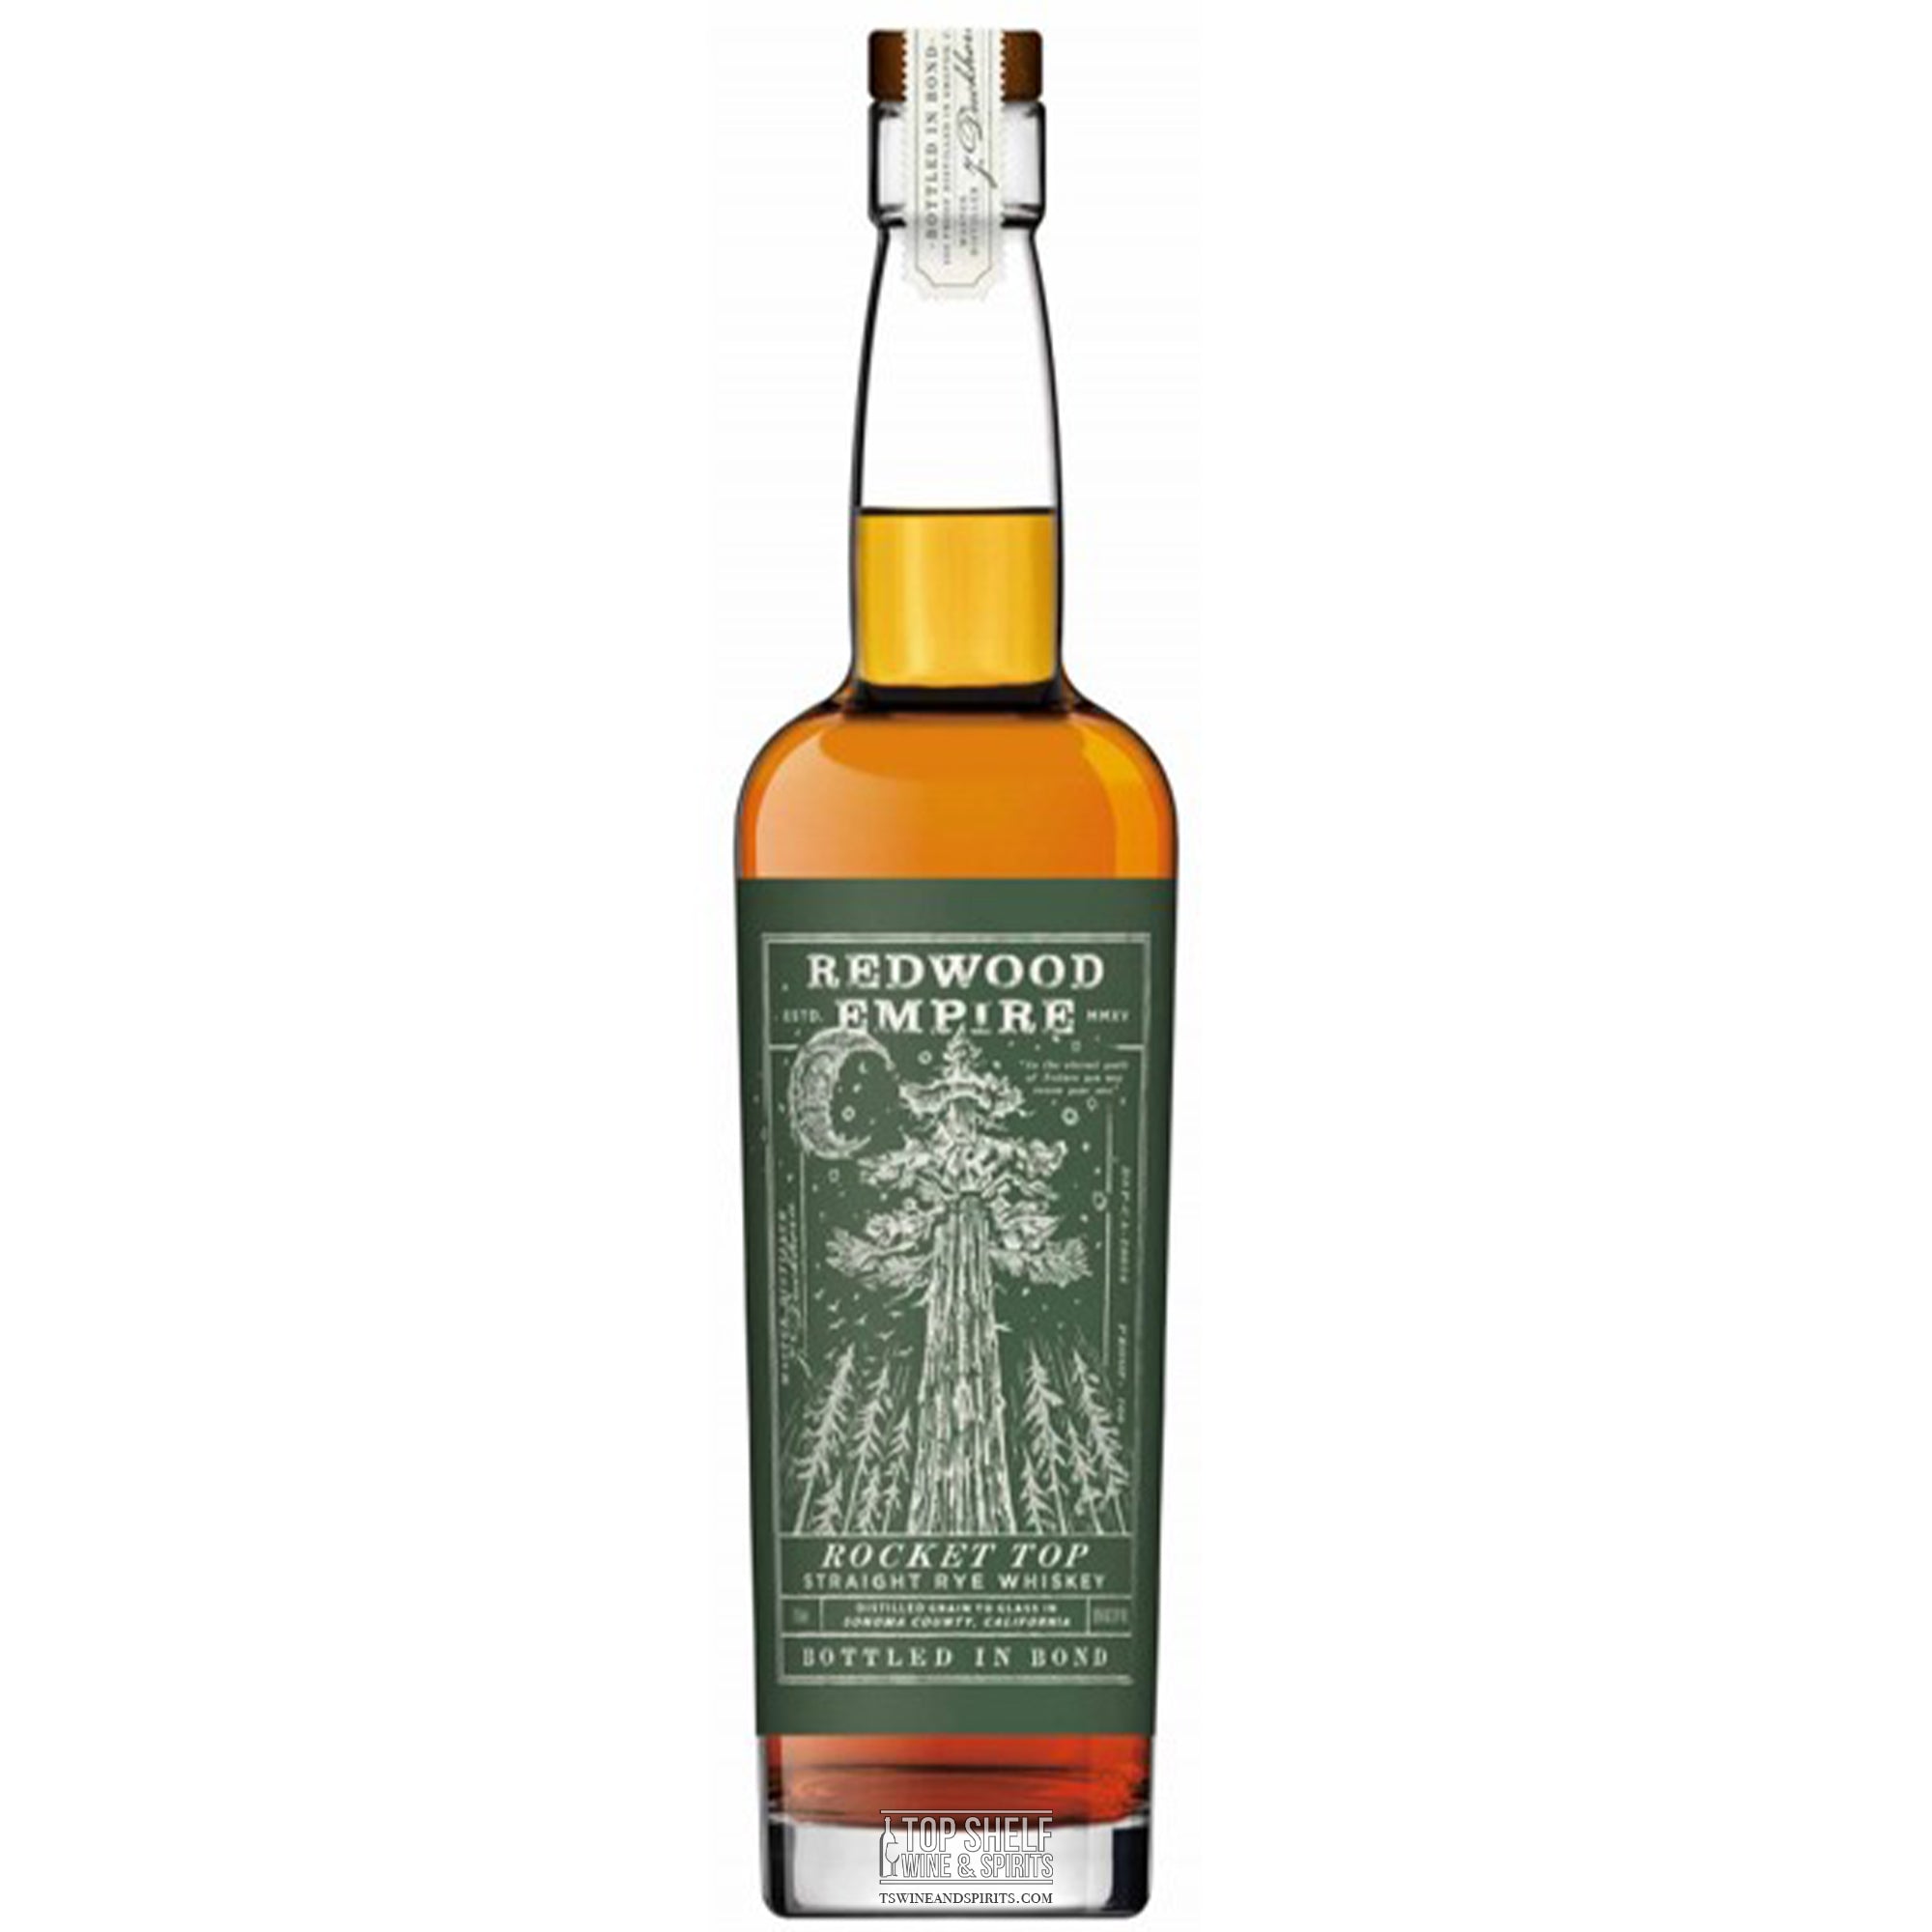 Redwood Empire "Rocket Top" Bottled In Bond Rye Whiskey 5 Year Batch 2